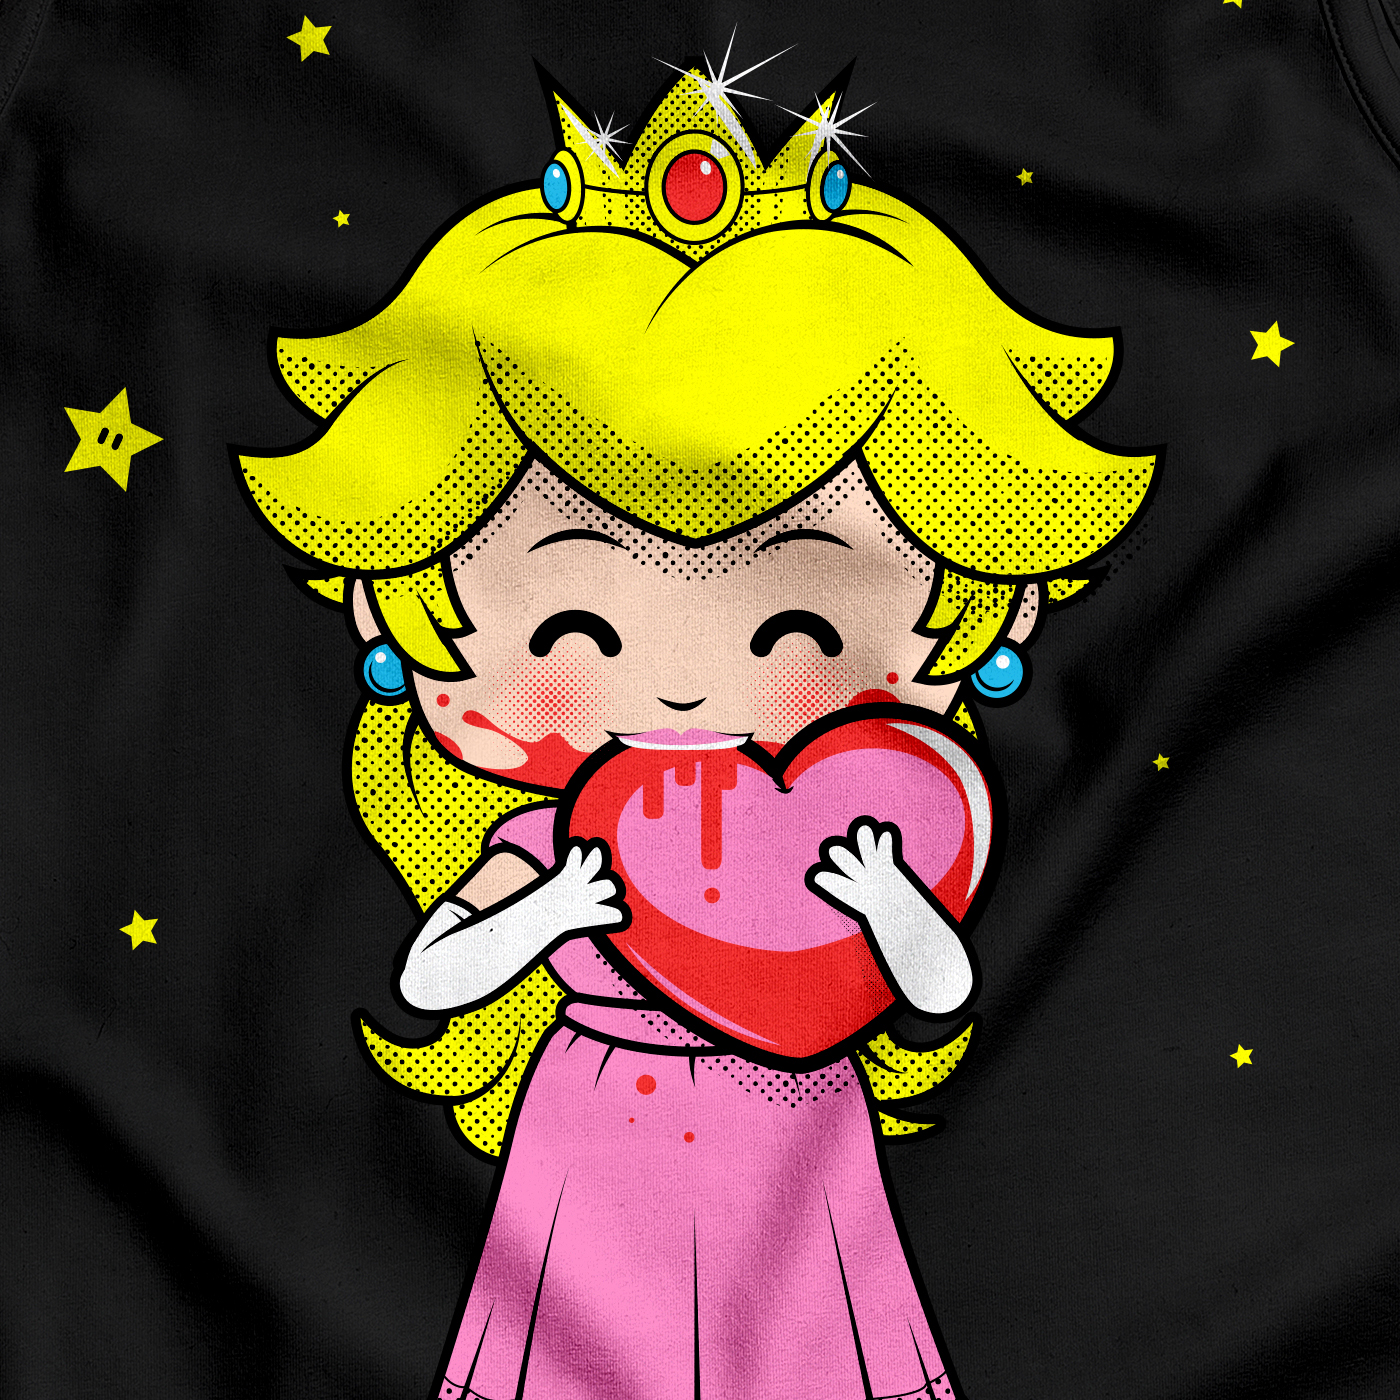 Princesse Peach mario Princess Peach Toadsool kaleesi daenerys khaleesi Game of Thrones got heart